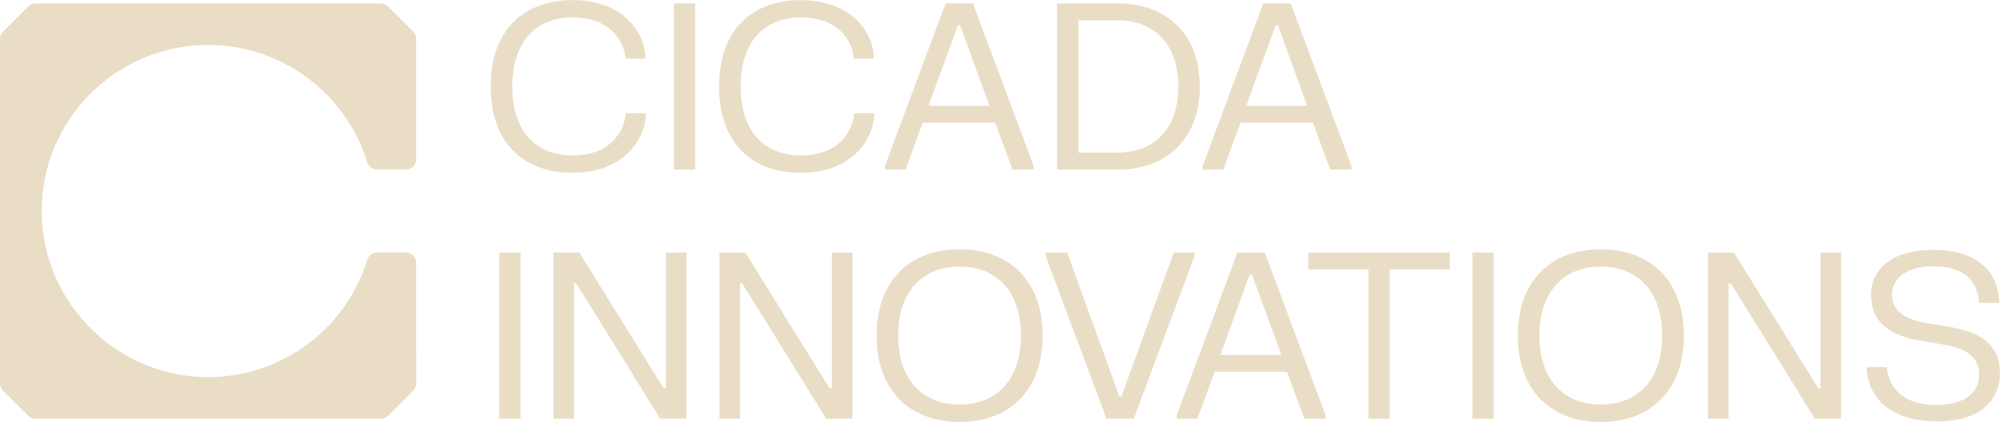 CicadaInnovations_Logo_Horizontal_Sand